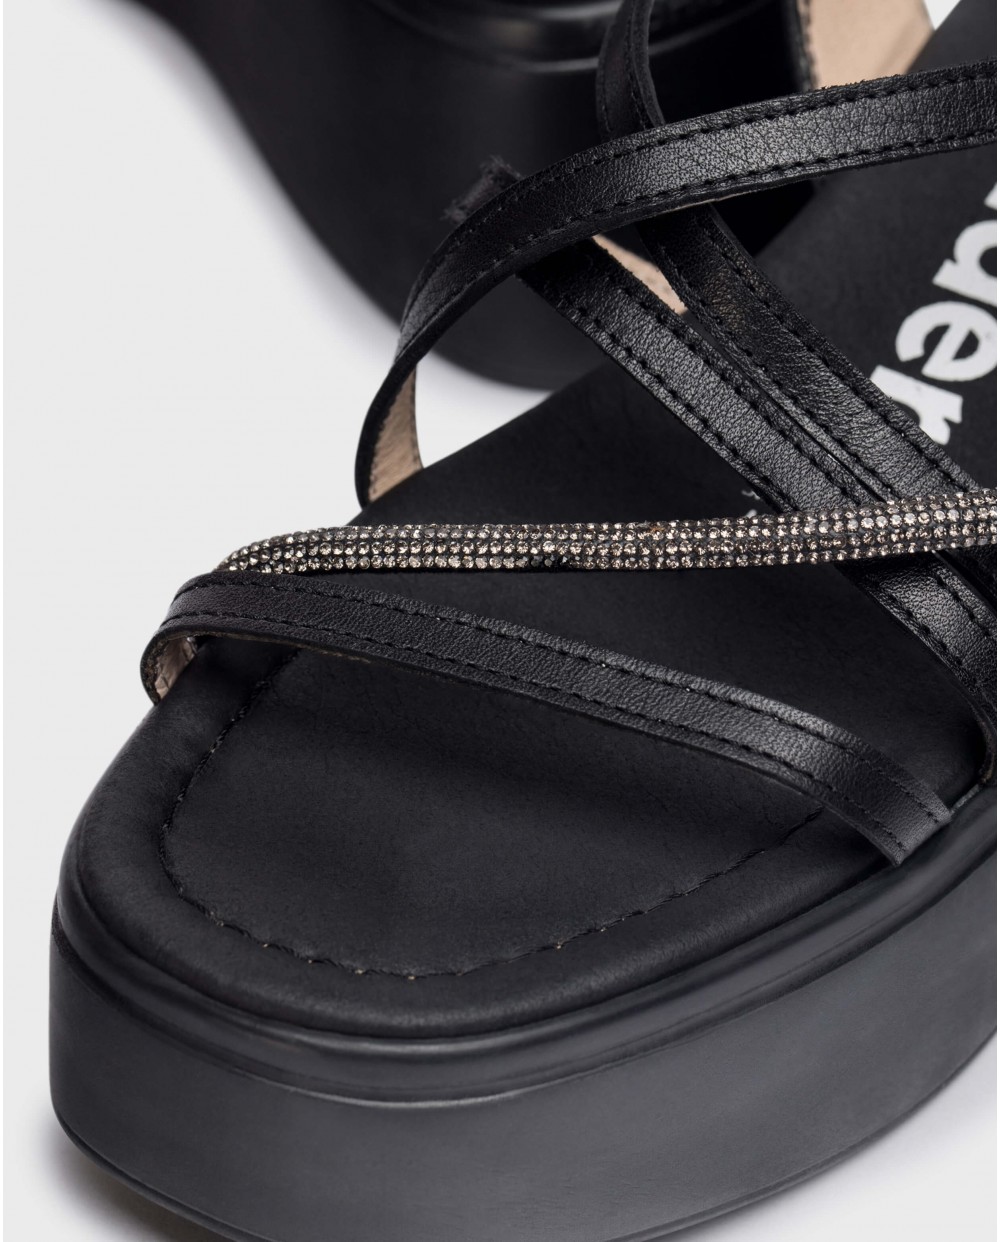 Black Martina platform sandals